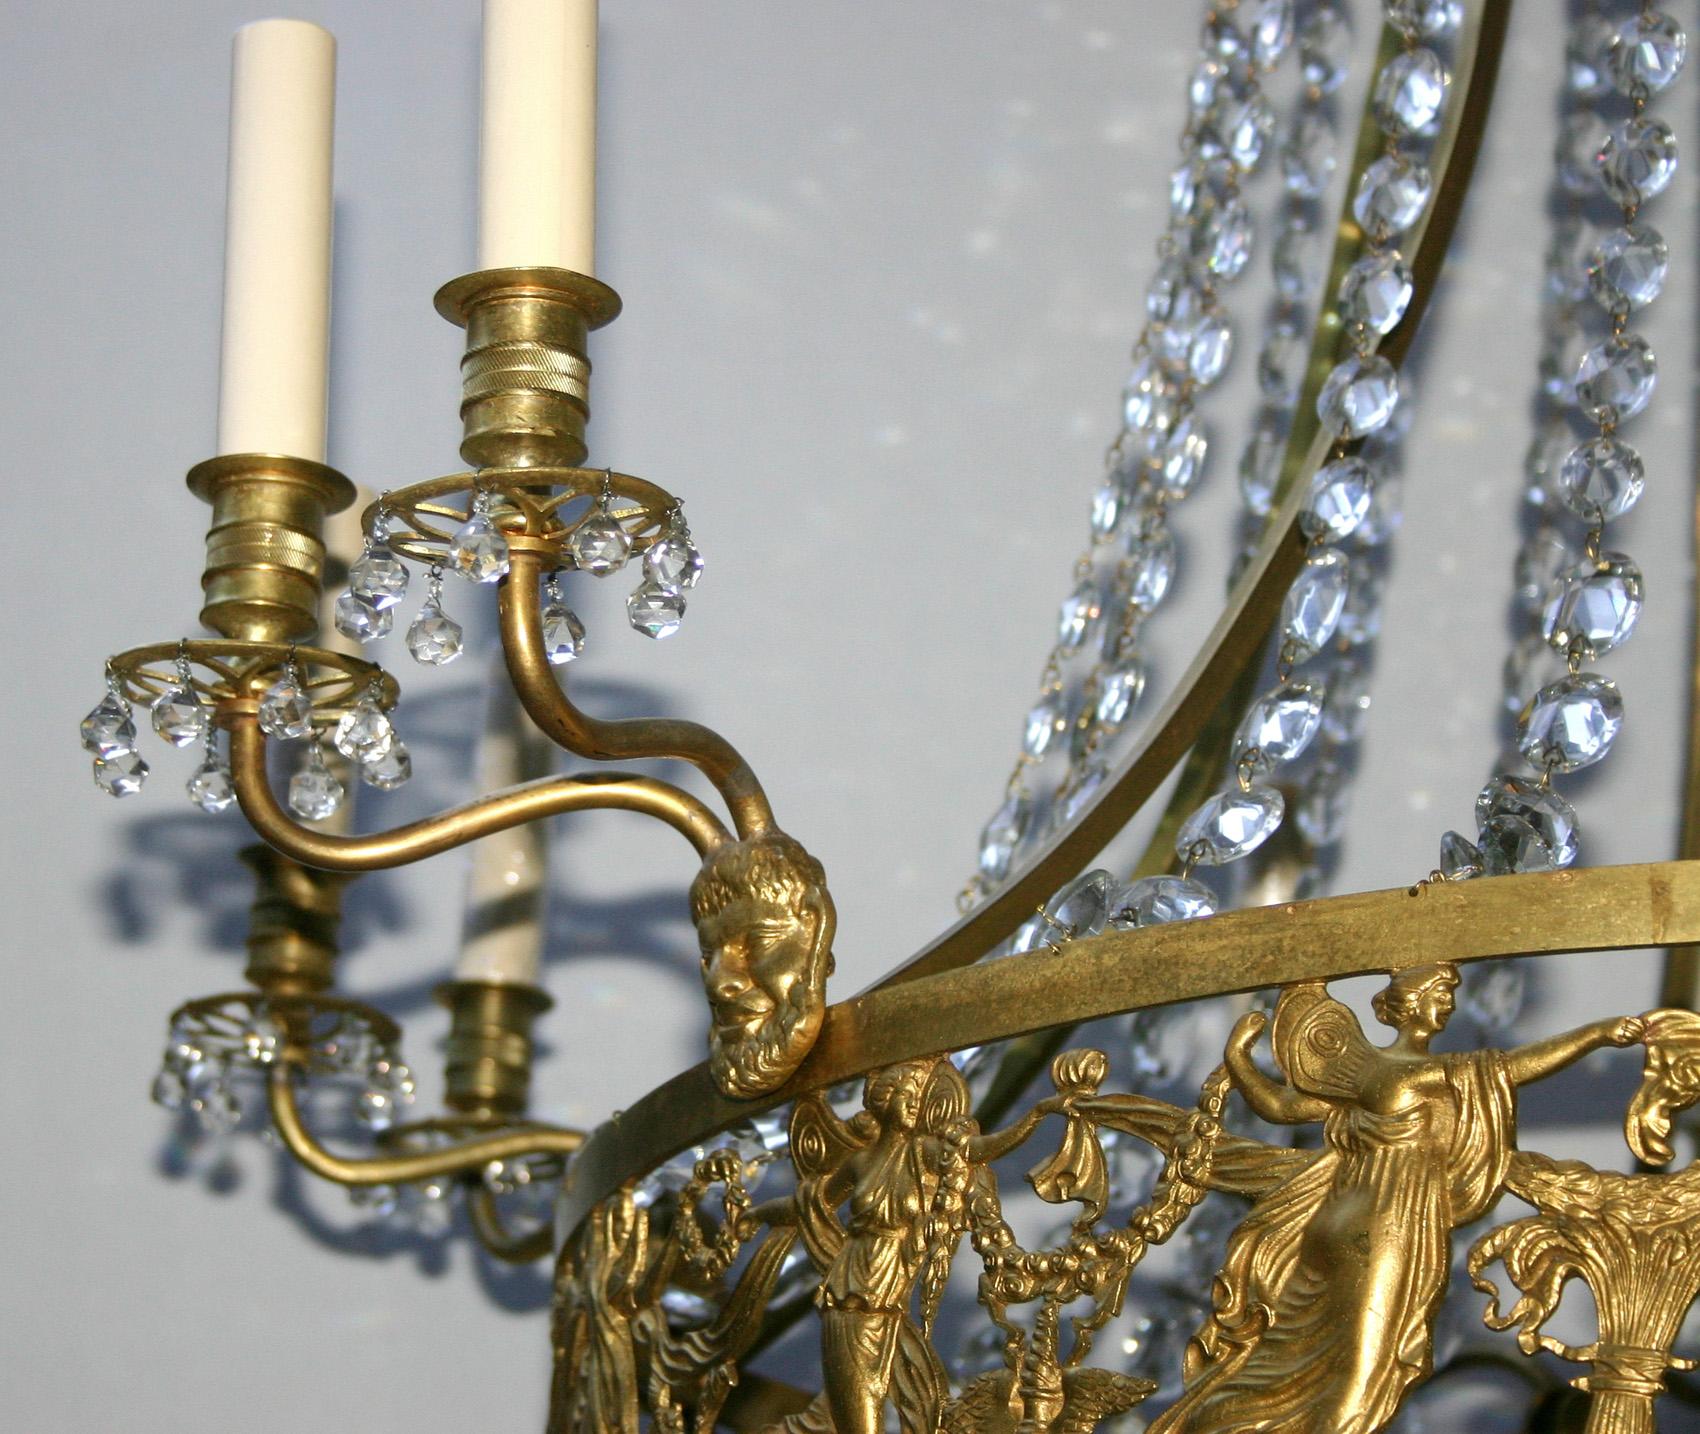 Circa 1900 Swedish gilt bronze chandelier with cobalt blue glass with 12 lights.

Measurements:
Diameter: 34